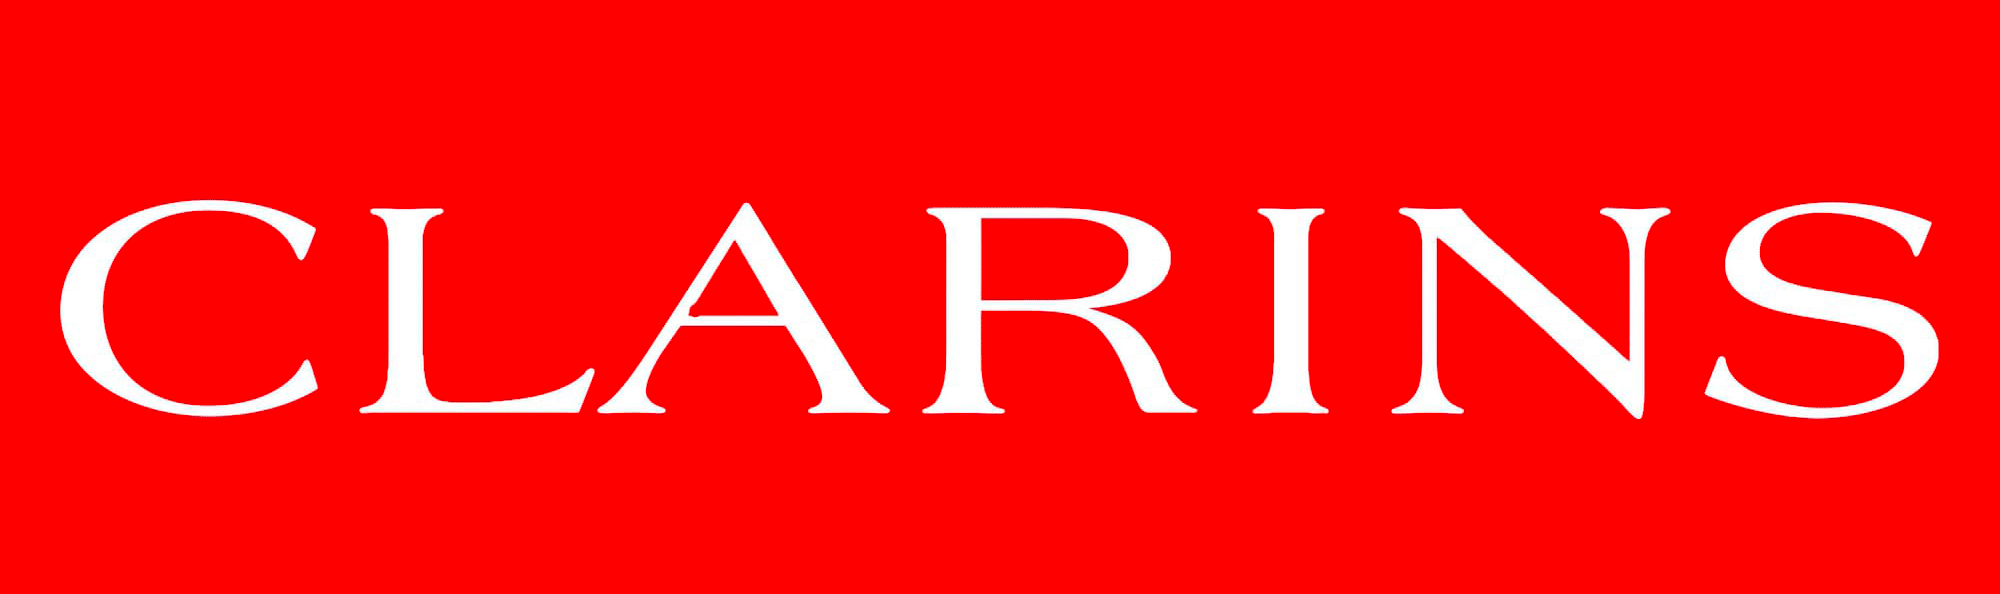 Clarins-logo